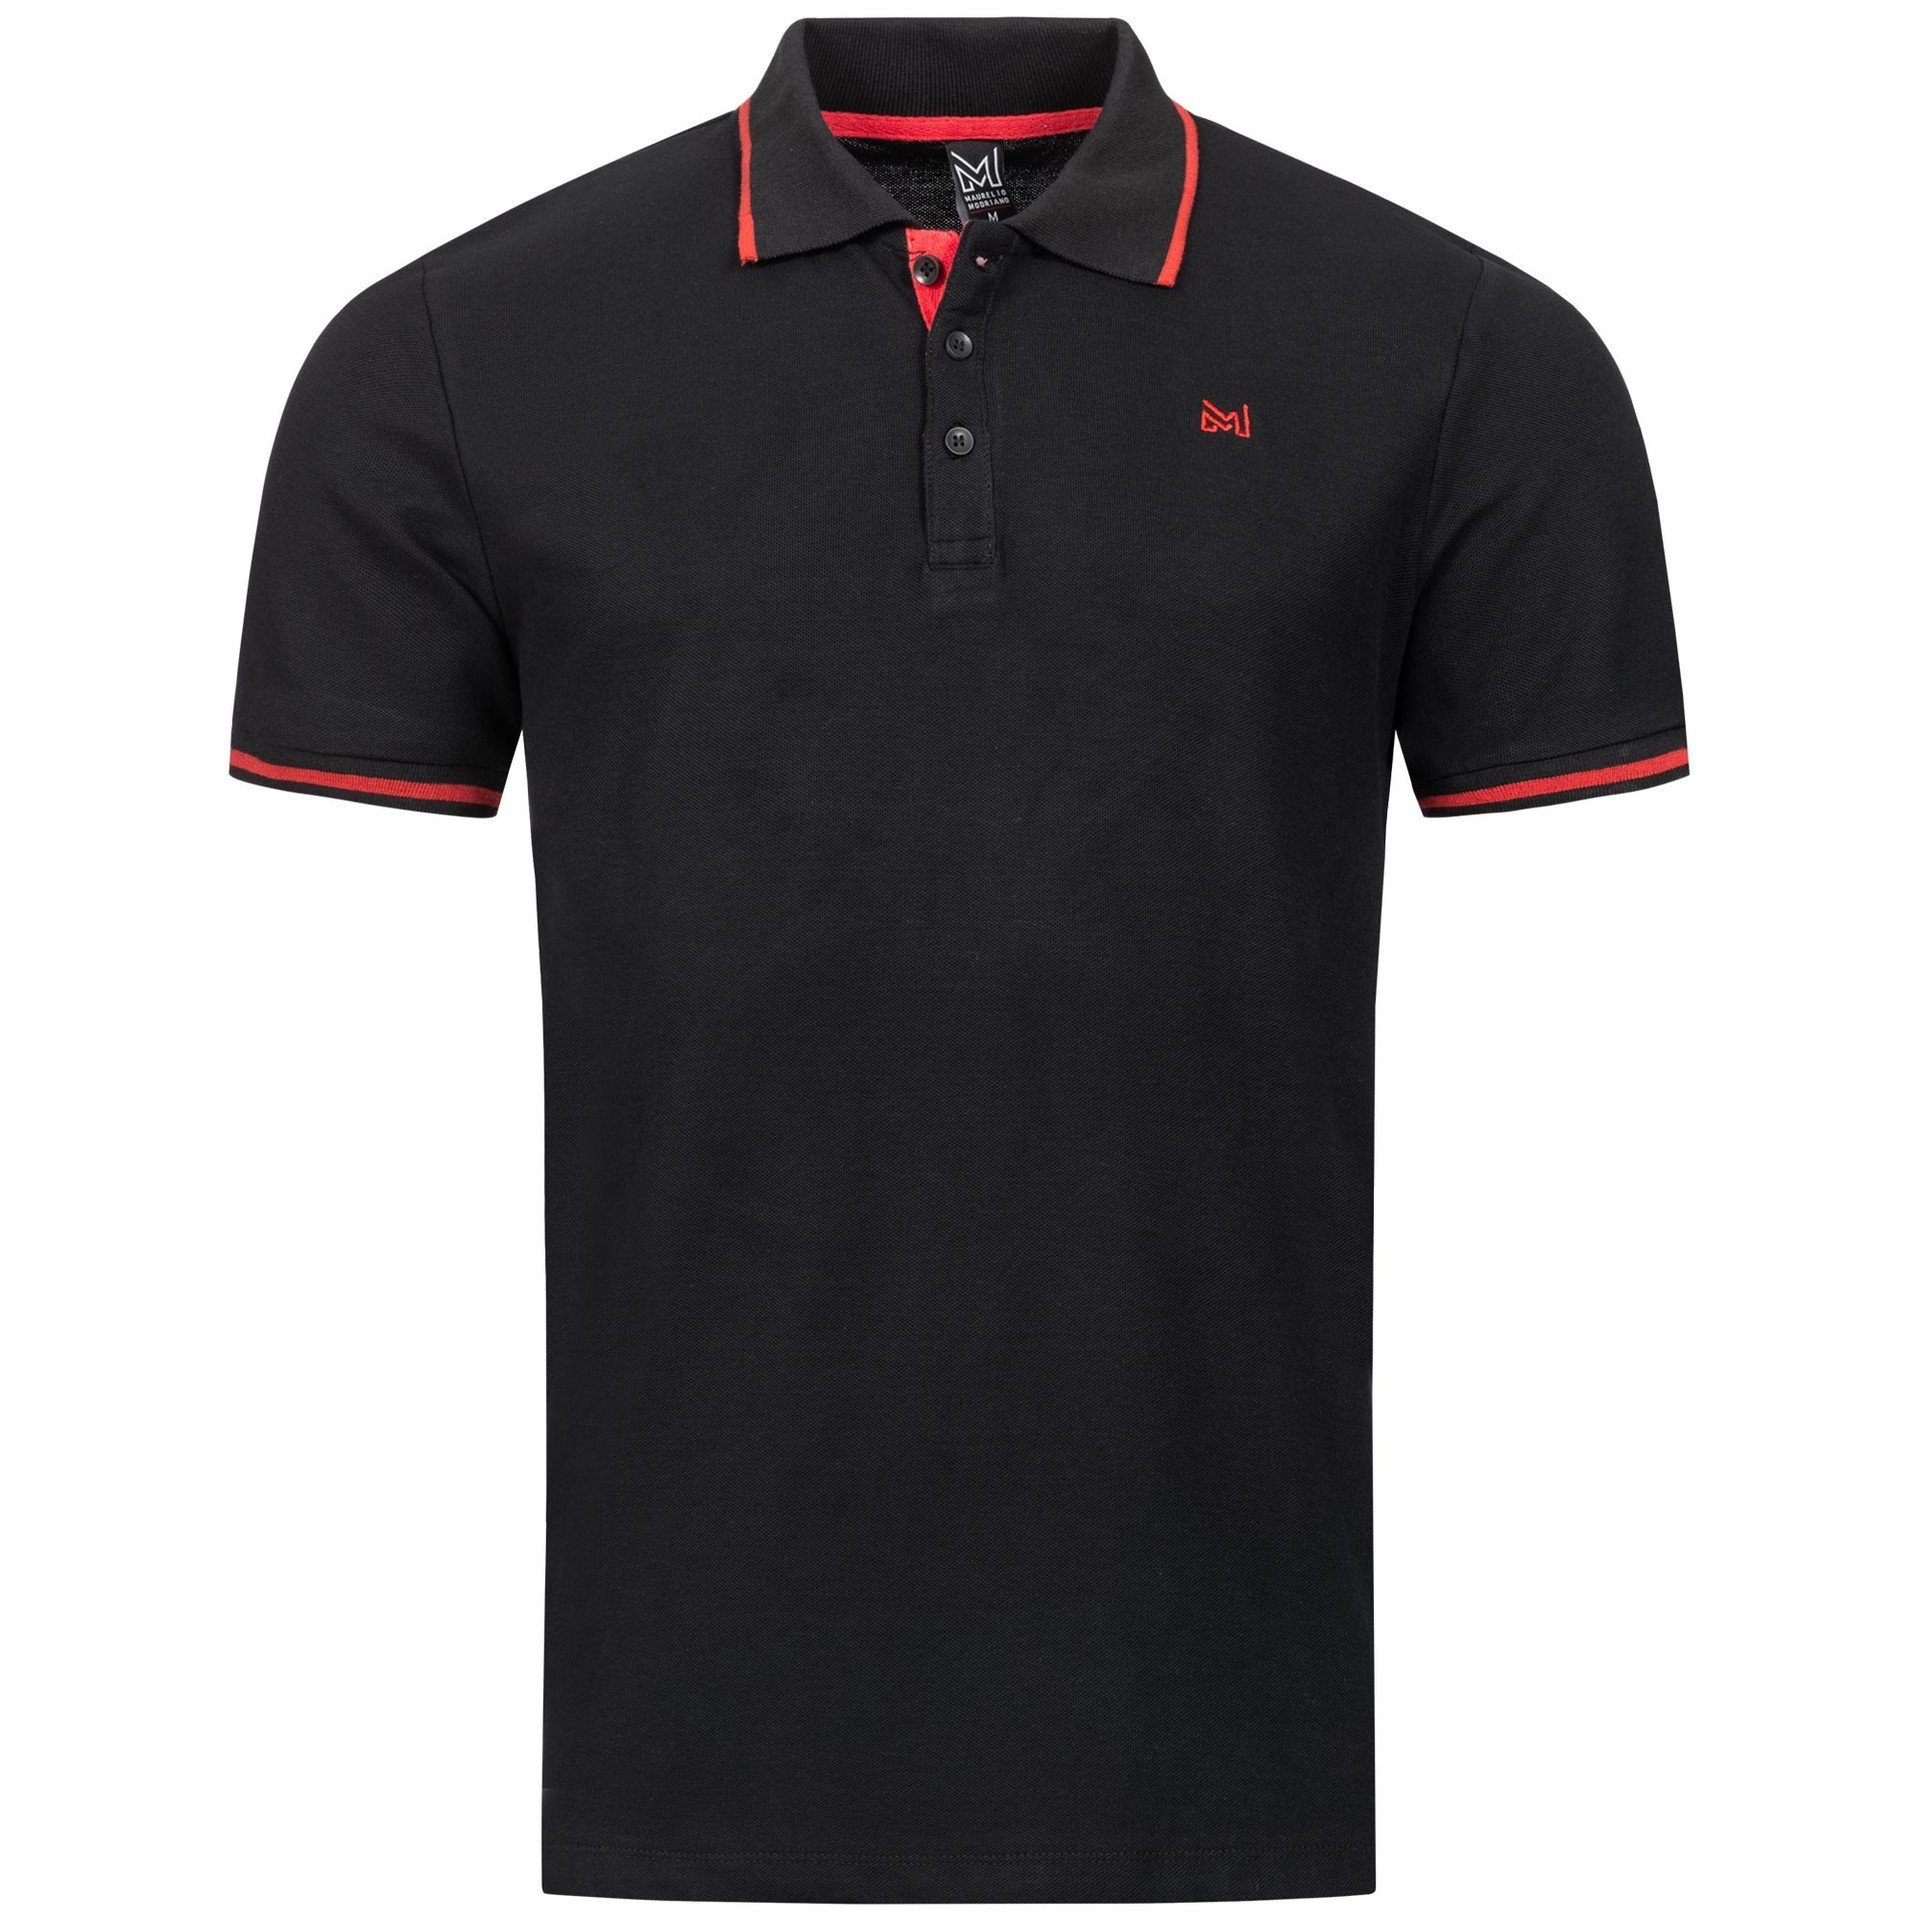 Maurelio Modriano Poloshirt Herren Polo Shirt MM-020 schwarz